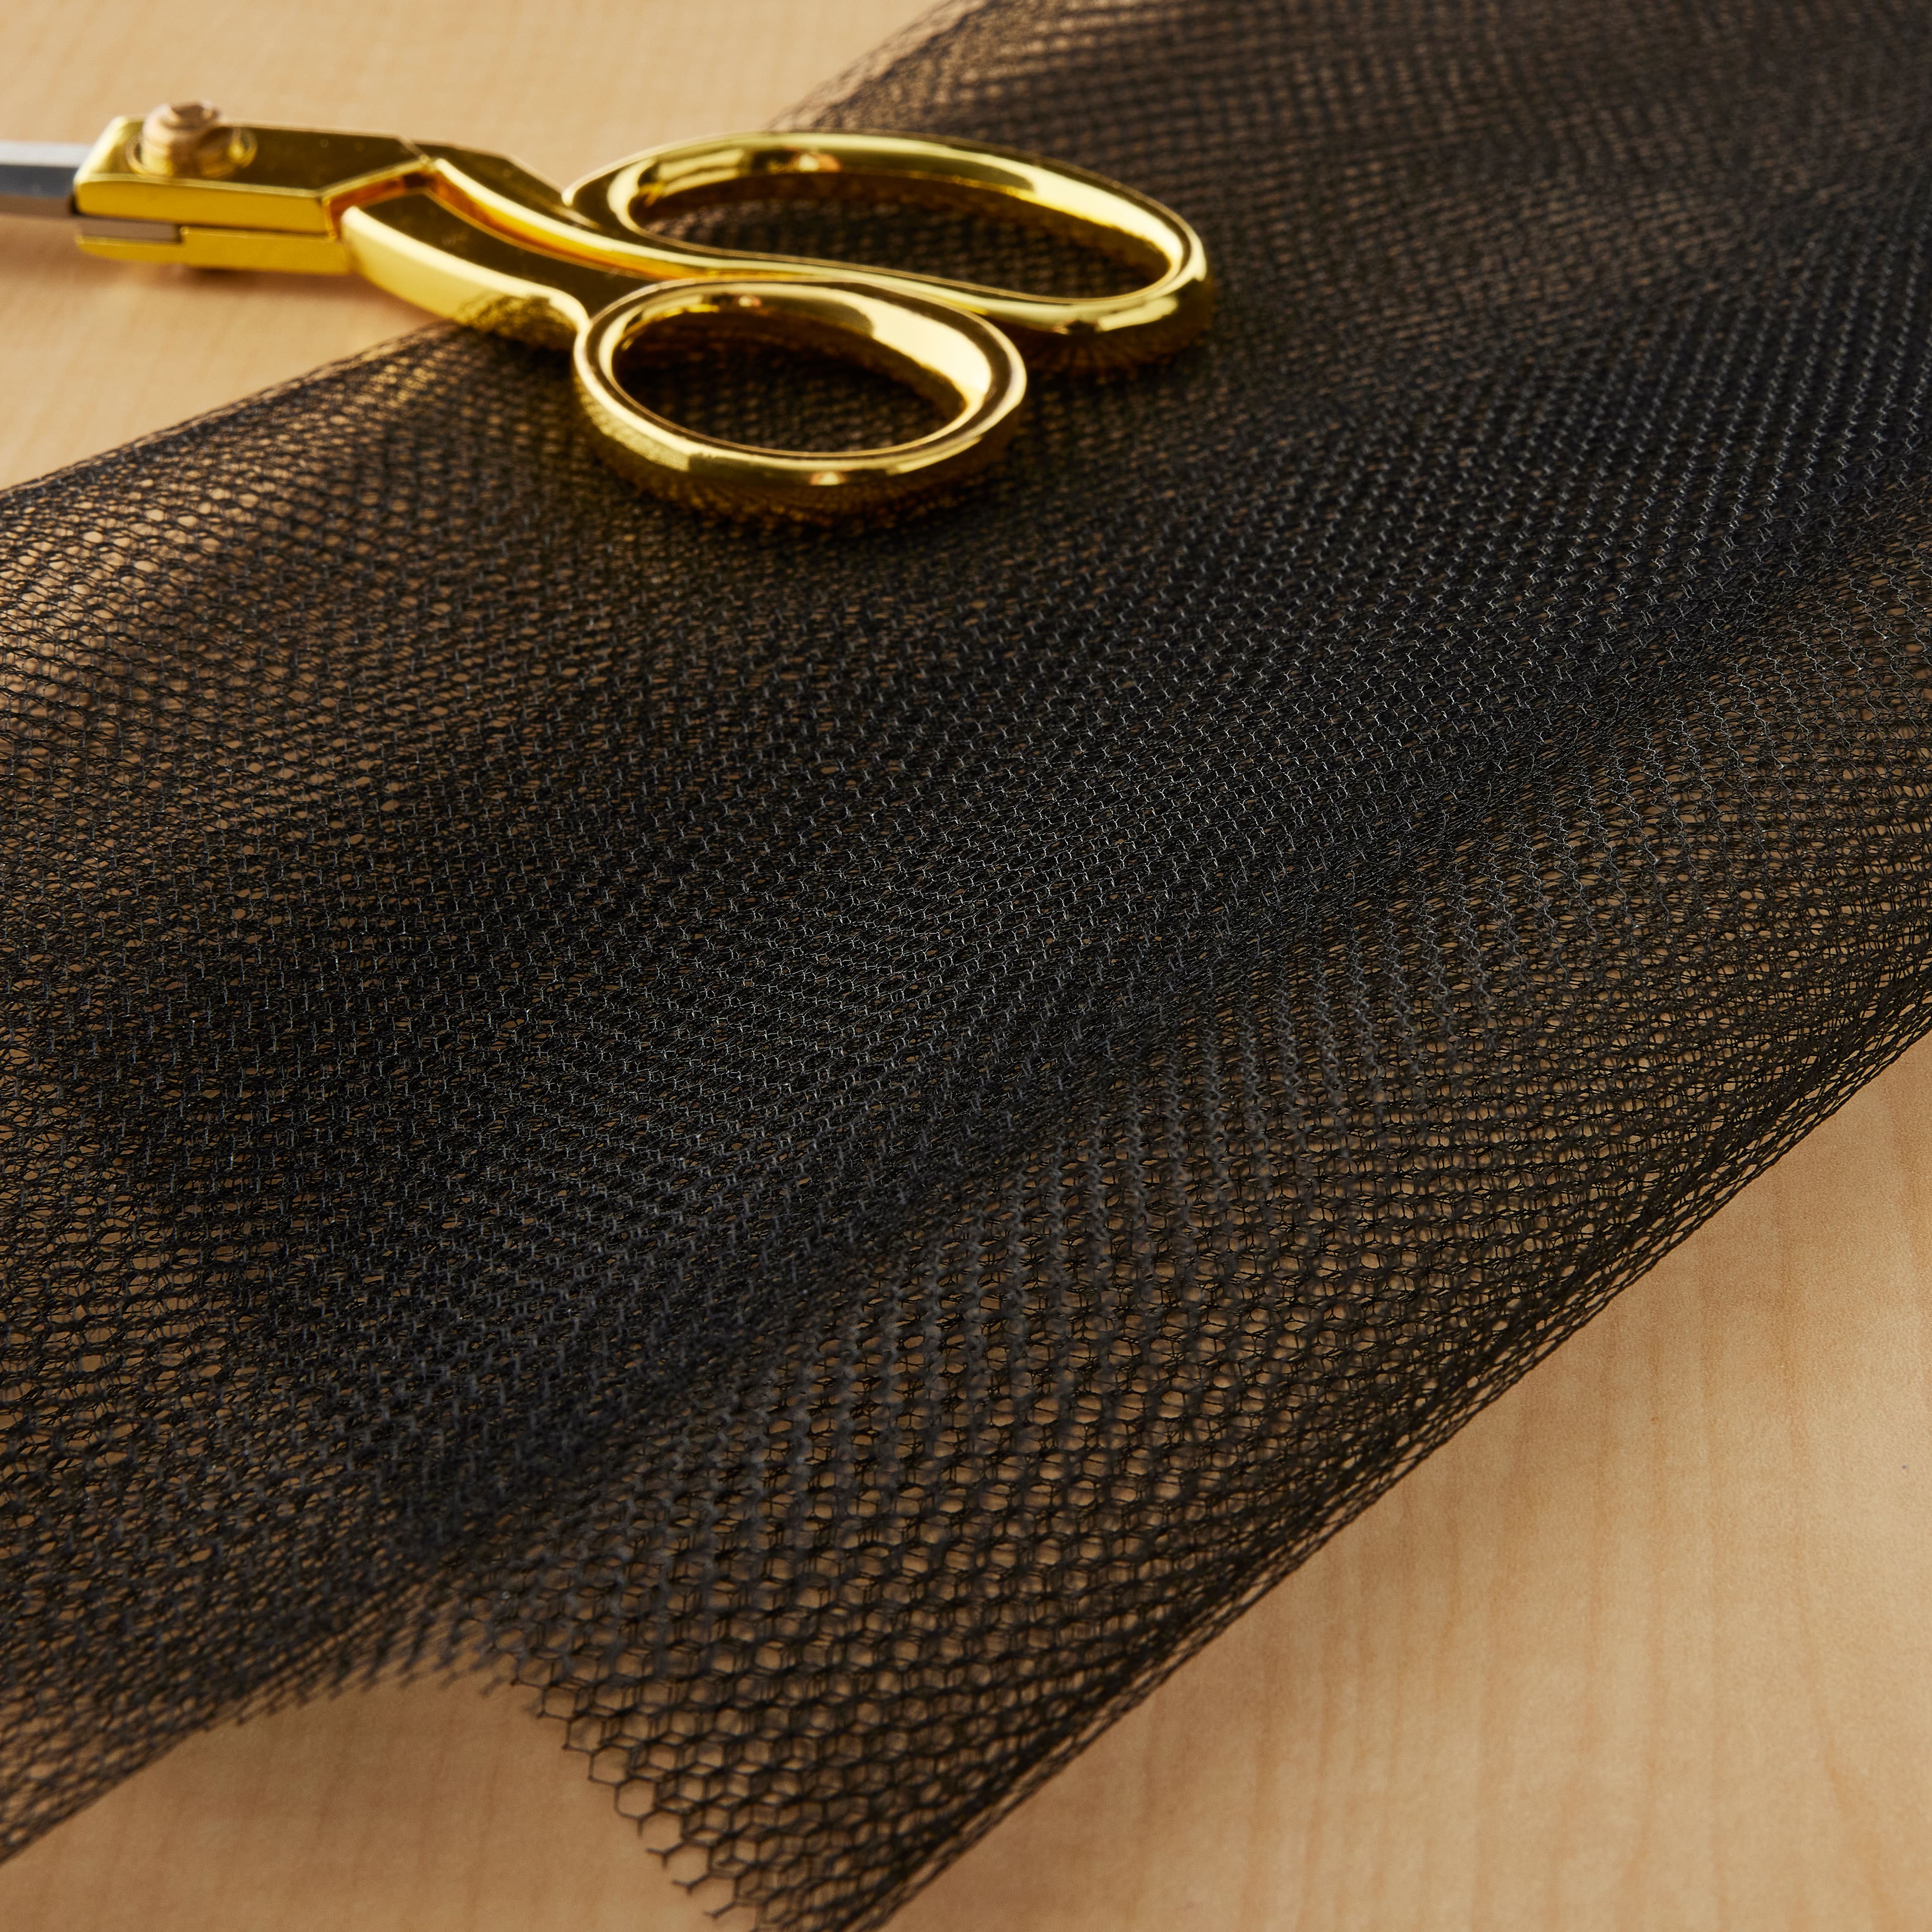 Black Matte Tulle Fabric